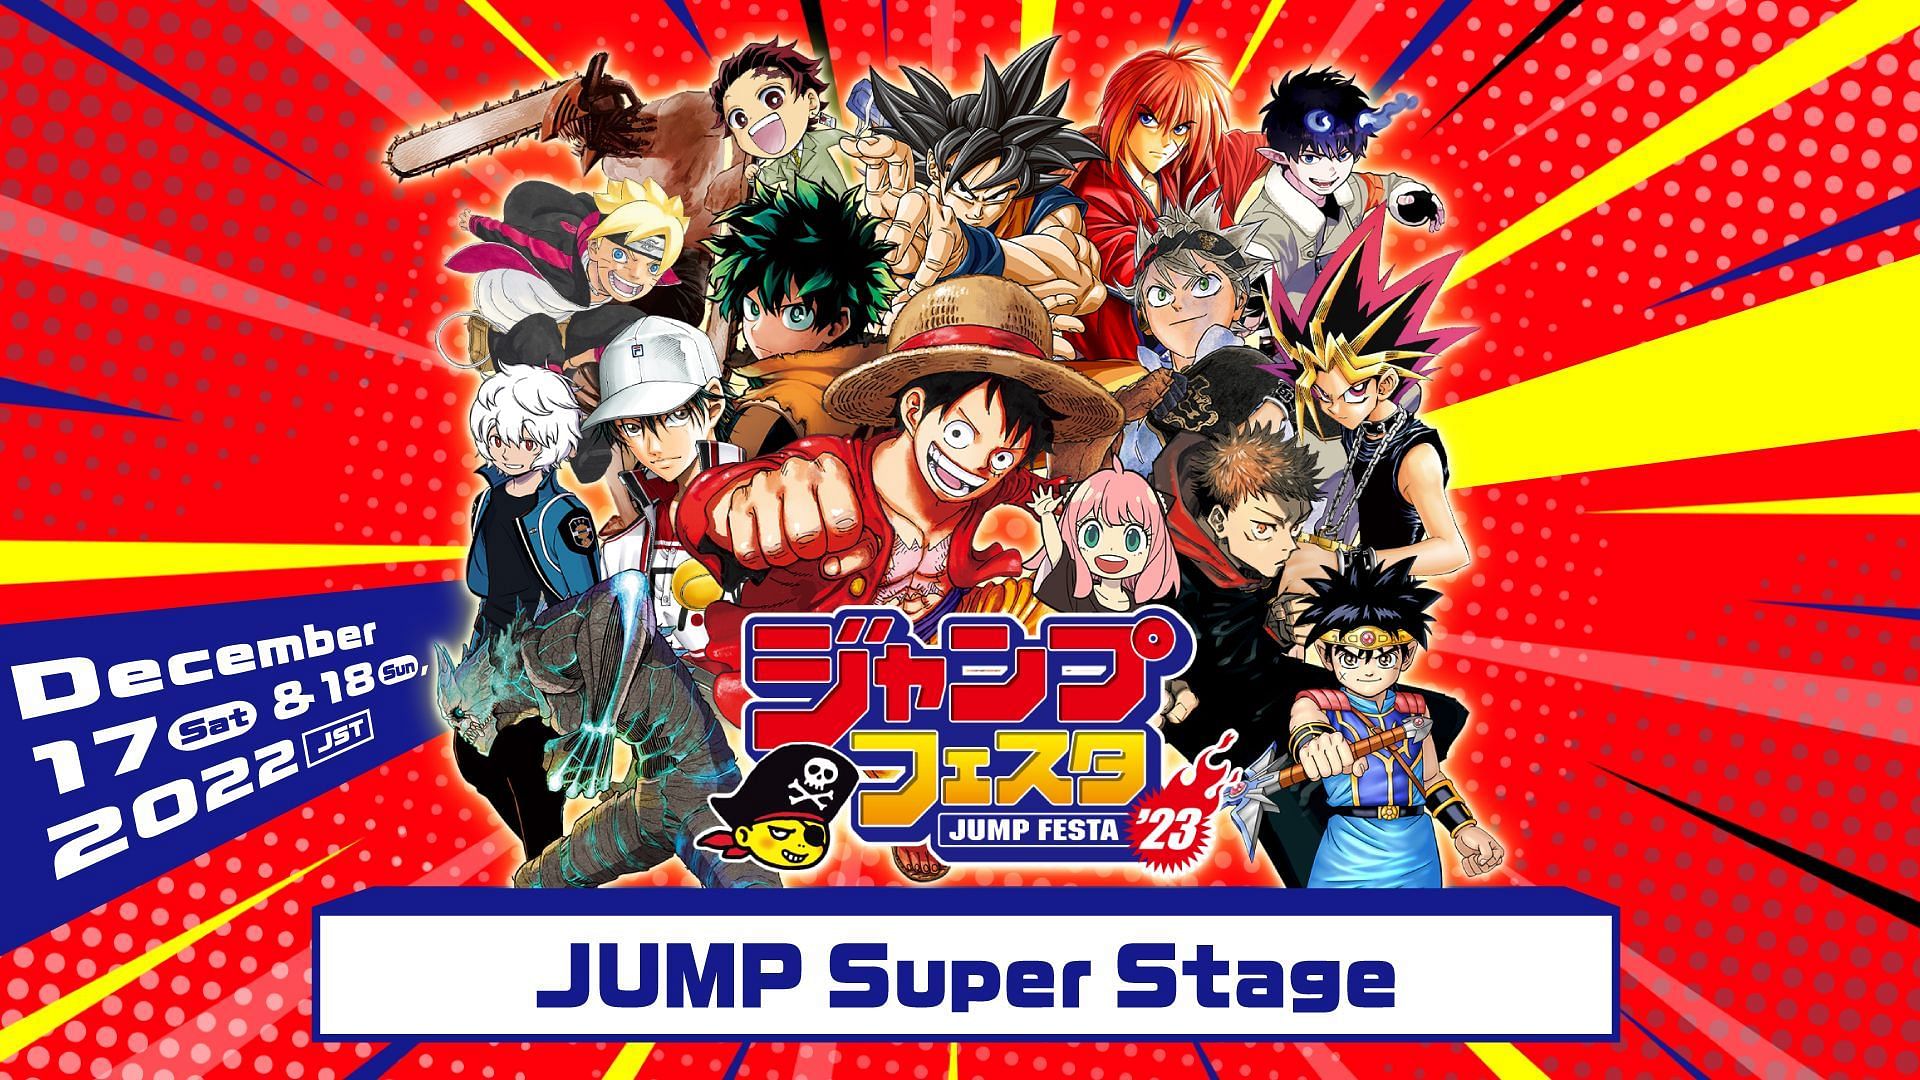 Dr. Stone season 3 gets a new trailer at Jump Festa 2023